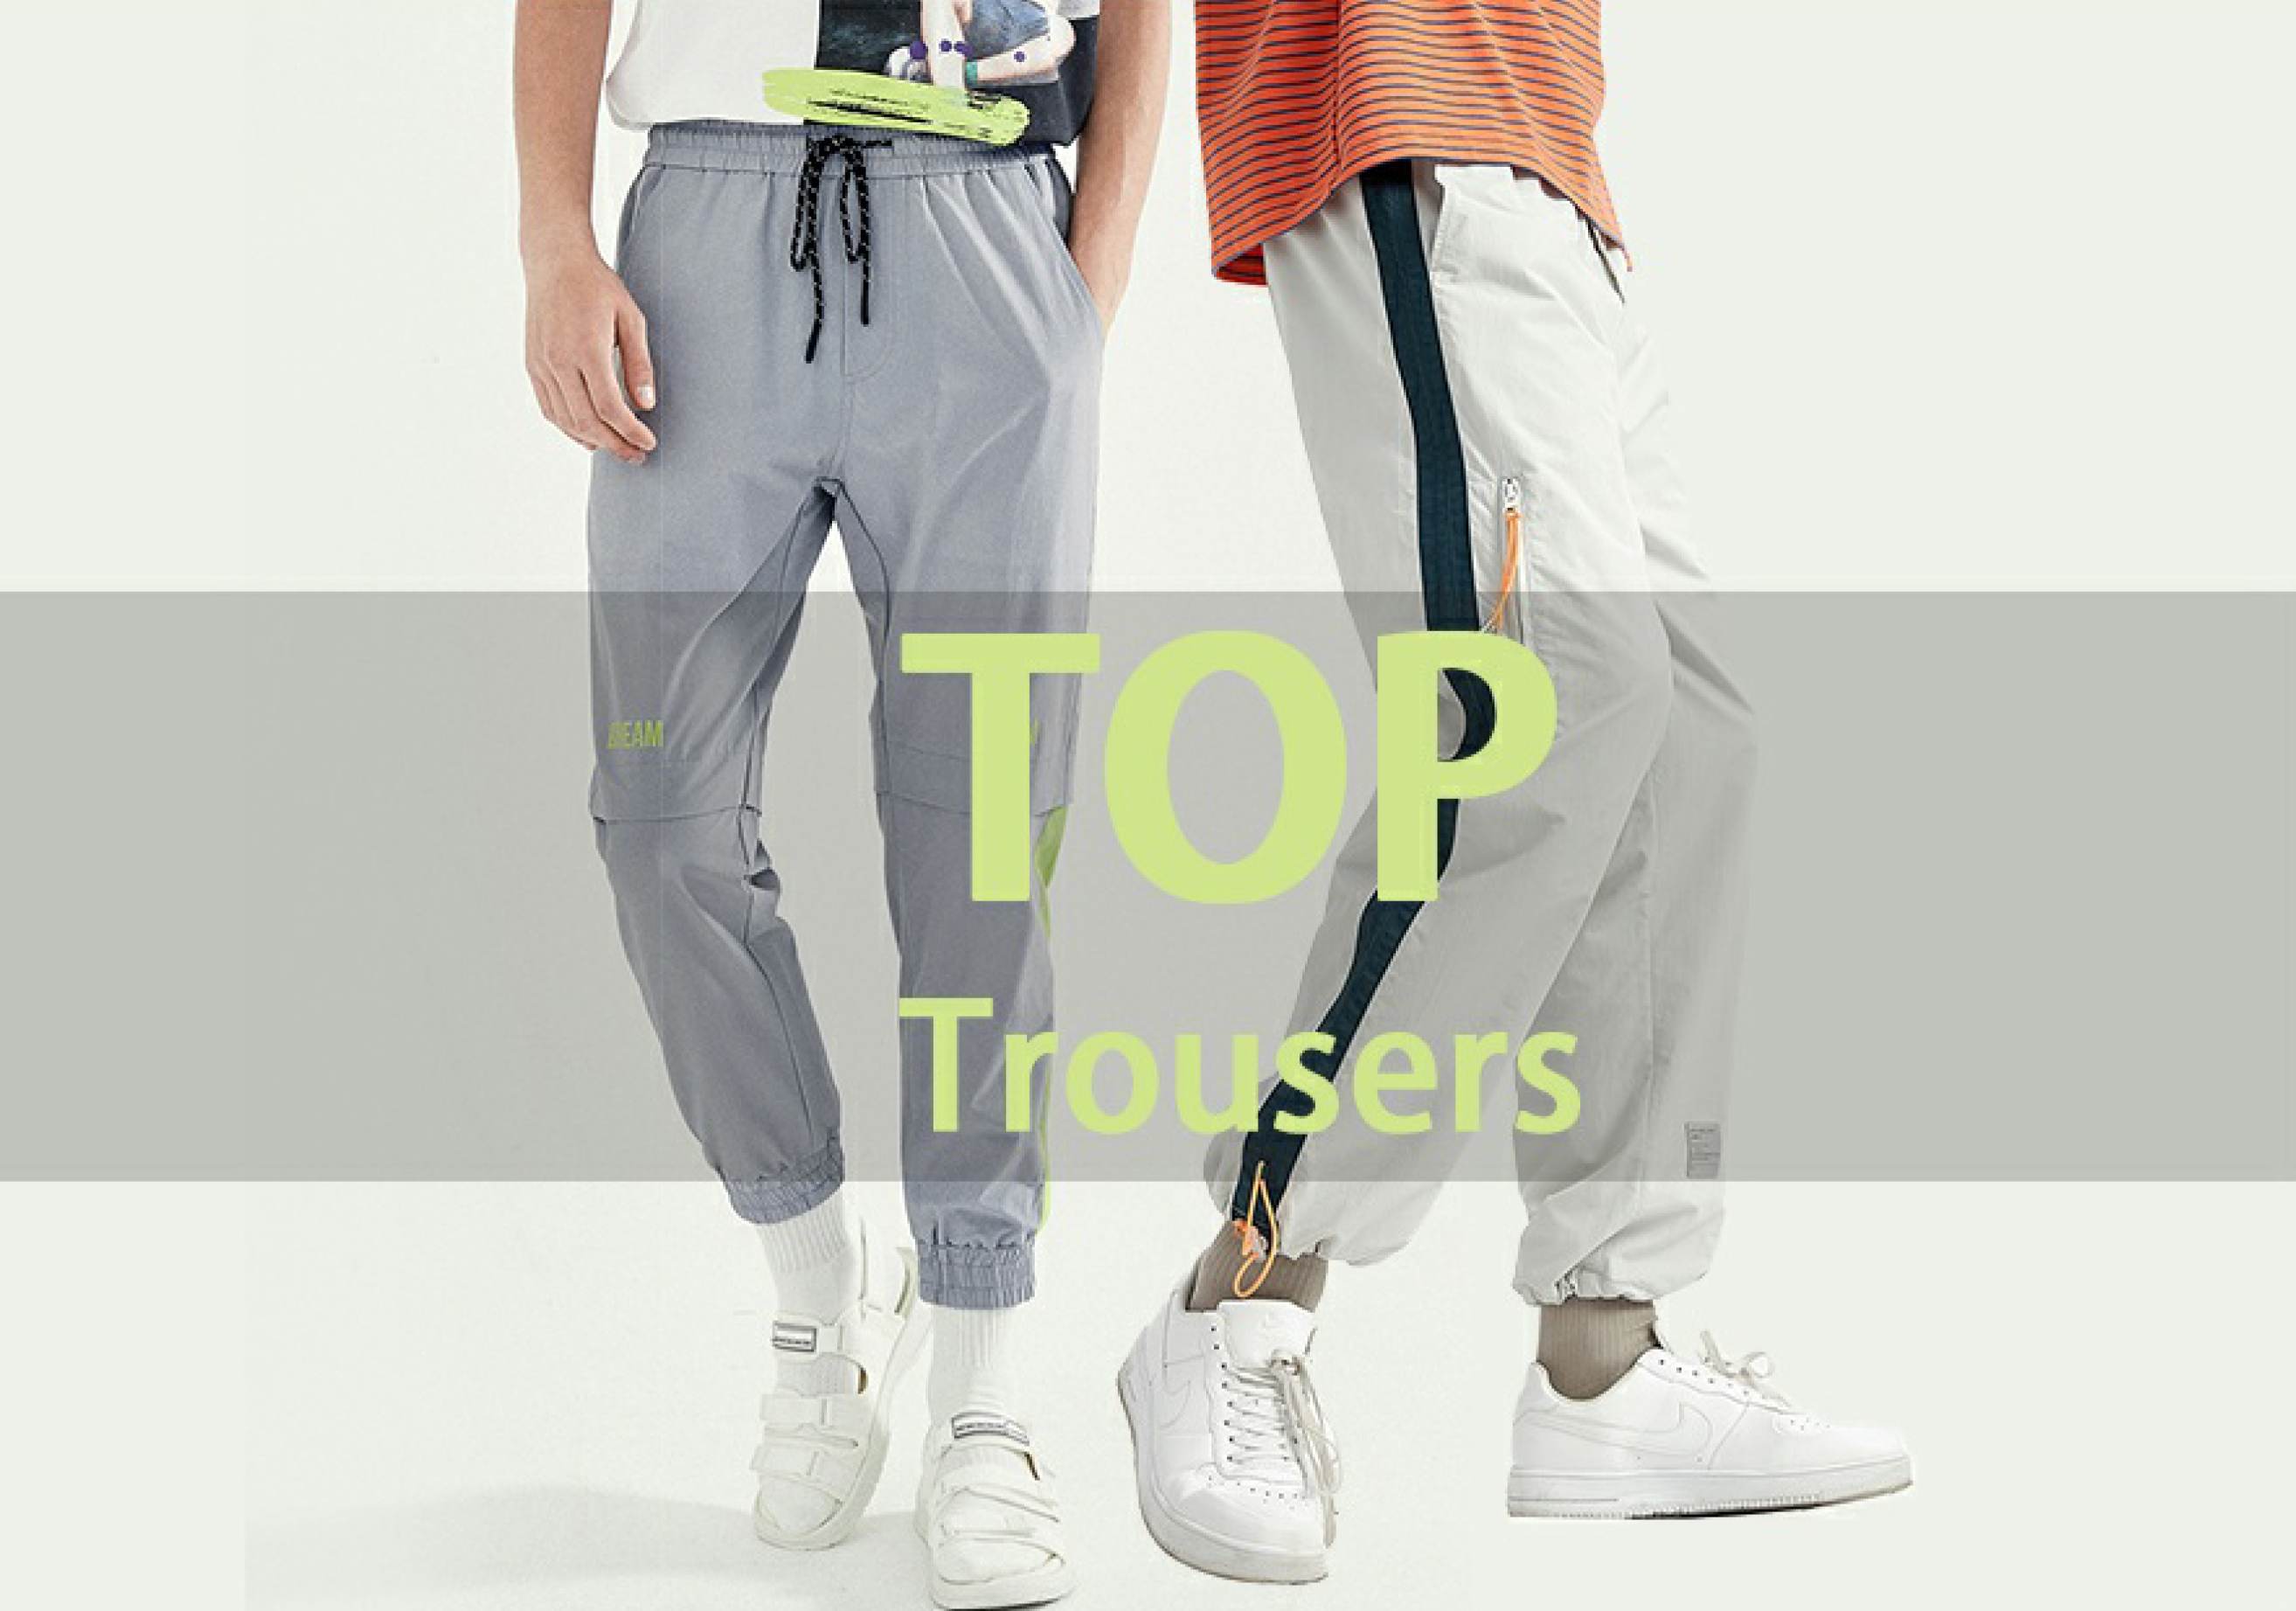 Midi Trousers -- 2019 Resort Hot Items of Menswear Market